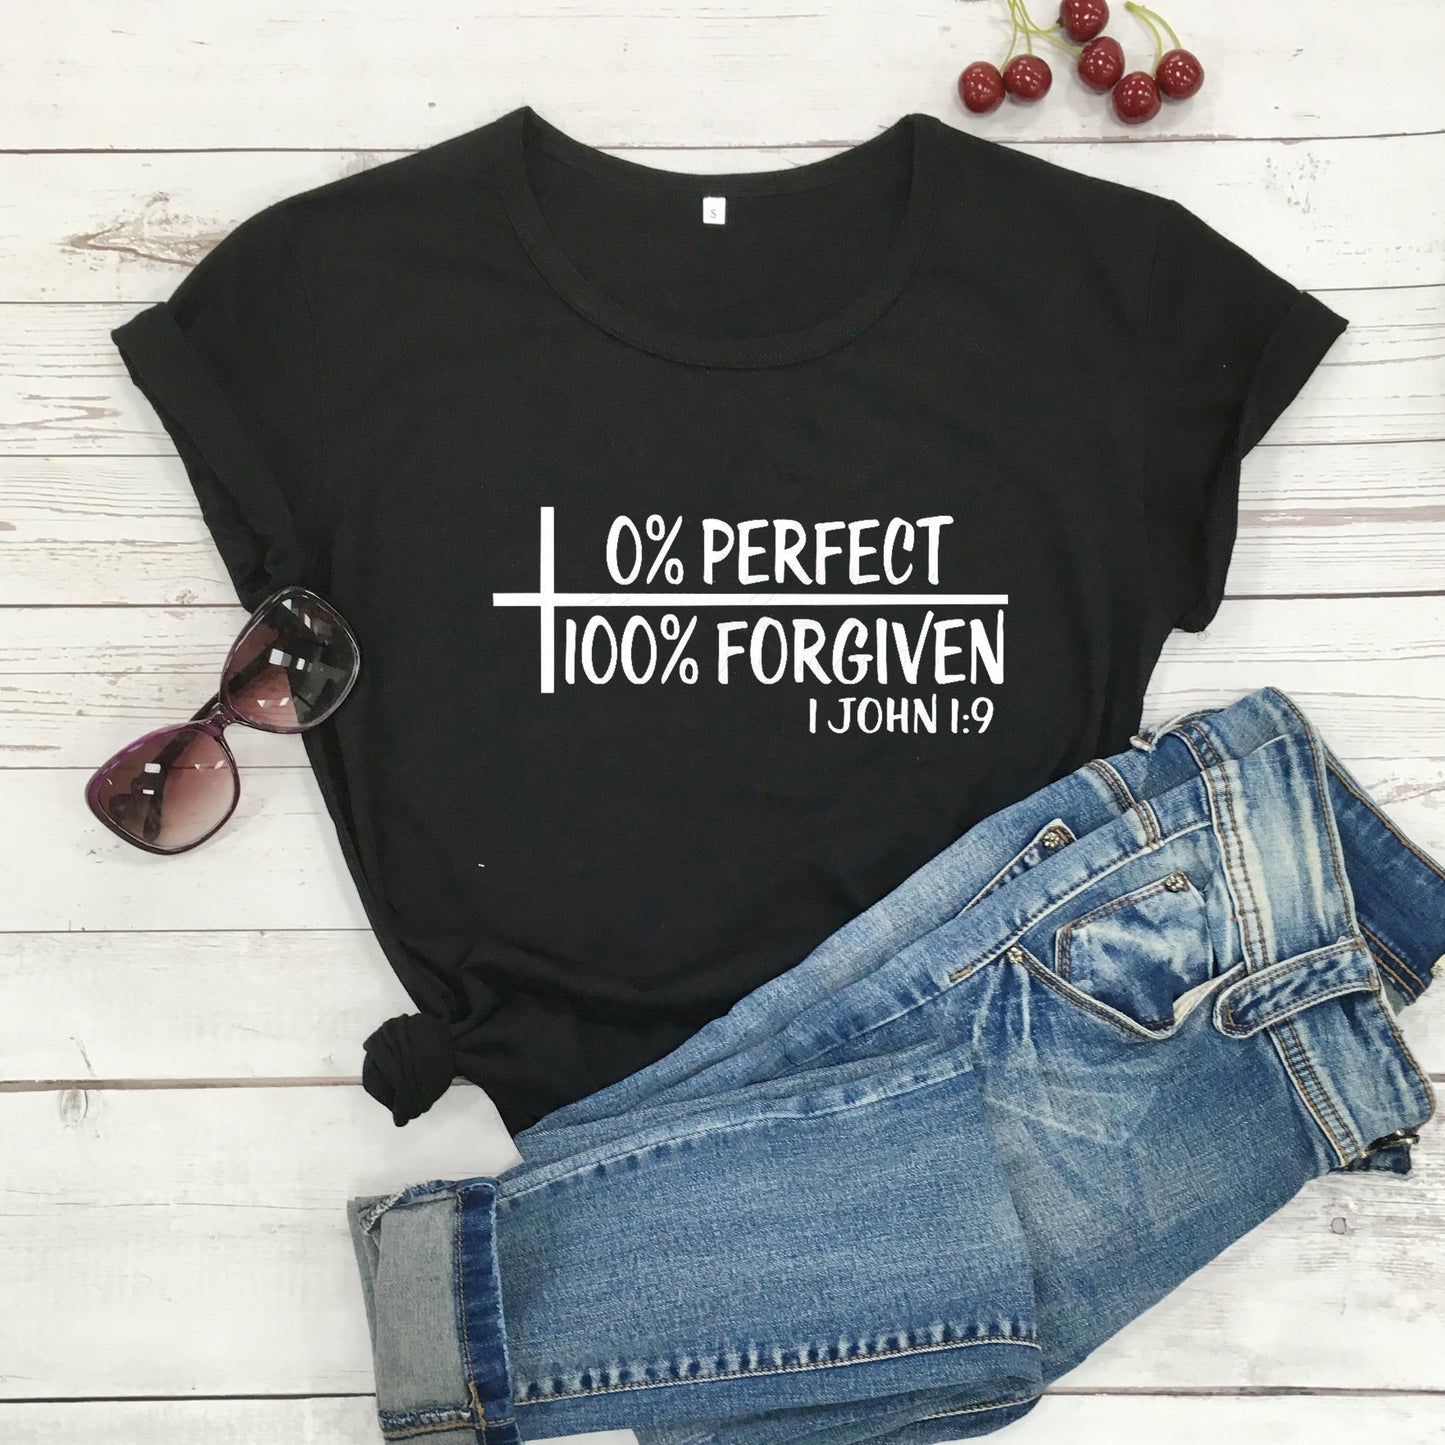 0% perfect 100% forgiven Bible Verse Christian Symbols cross Forgiven t shirt women fashion slogan tee vintage graphic top M008